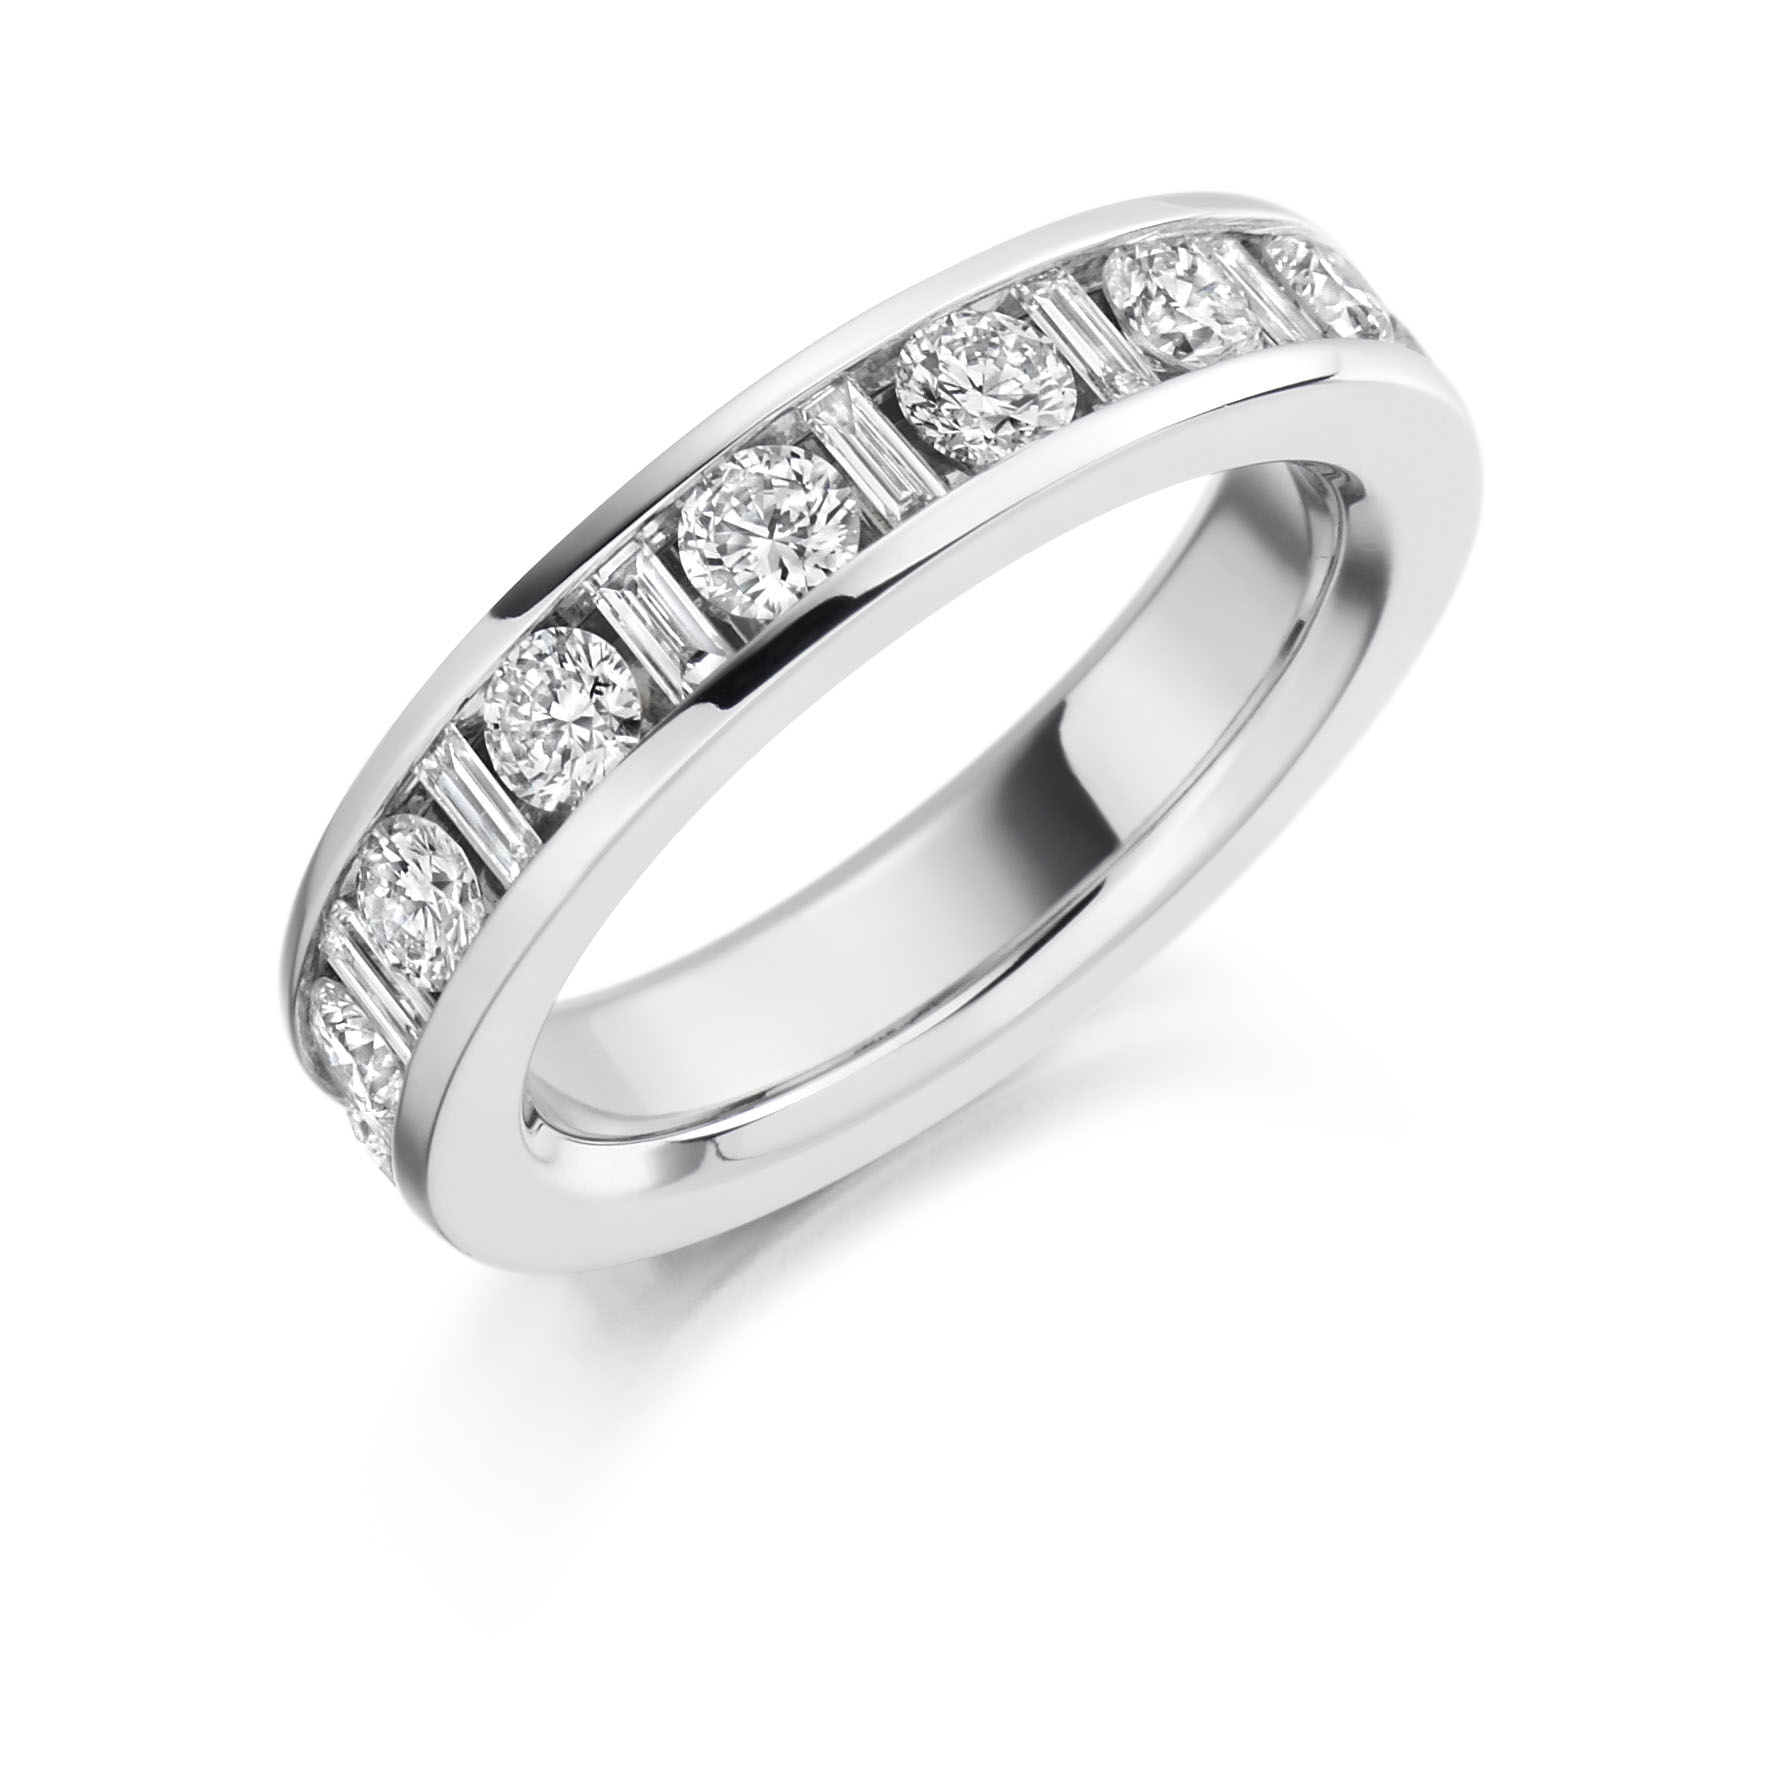 18 Carat White Gold Full Eternity Ring, 2 Carat Diamond Weight